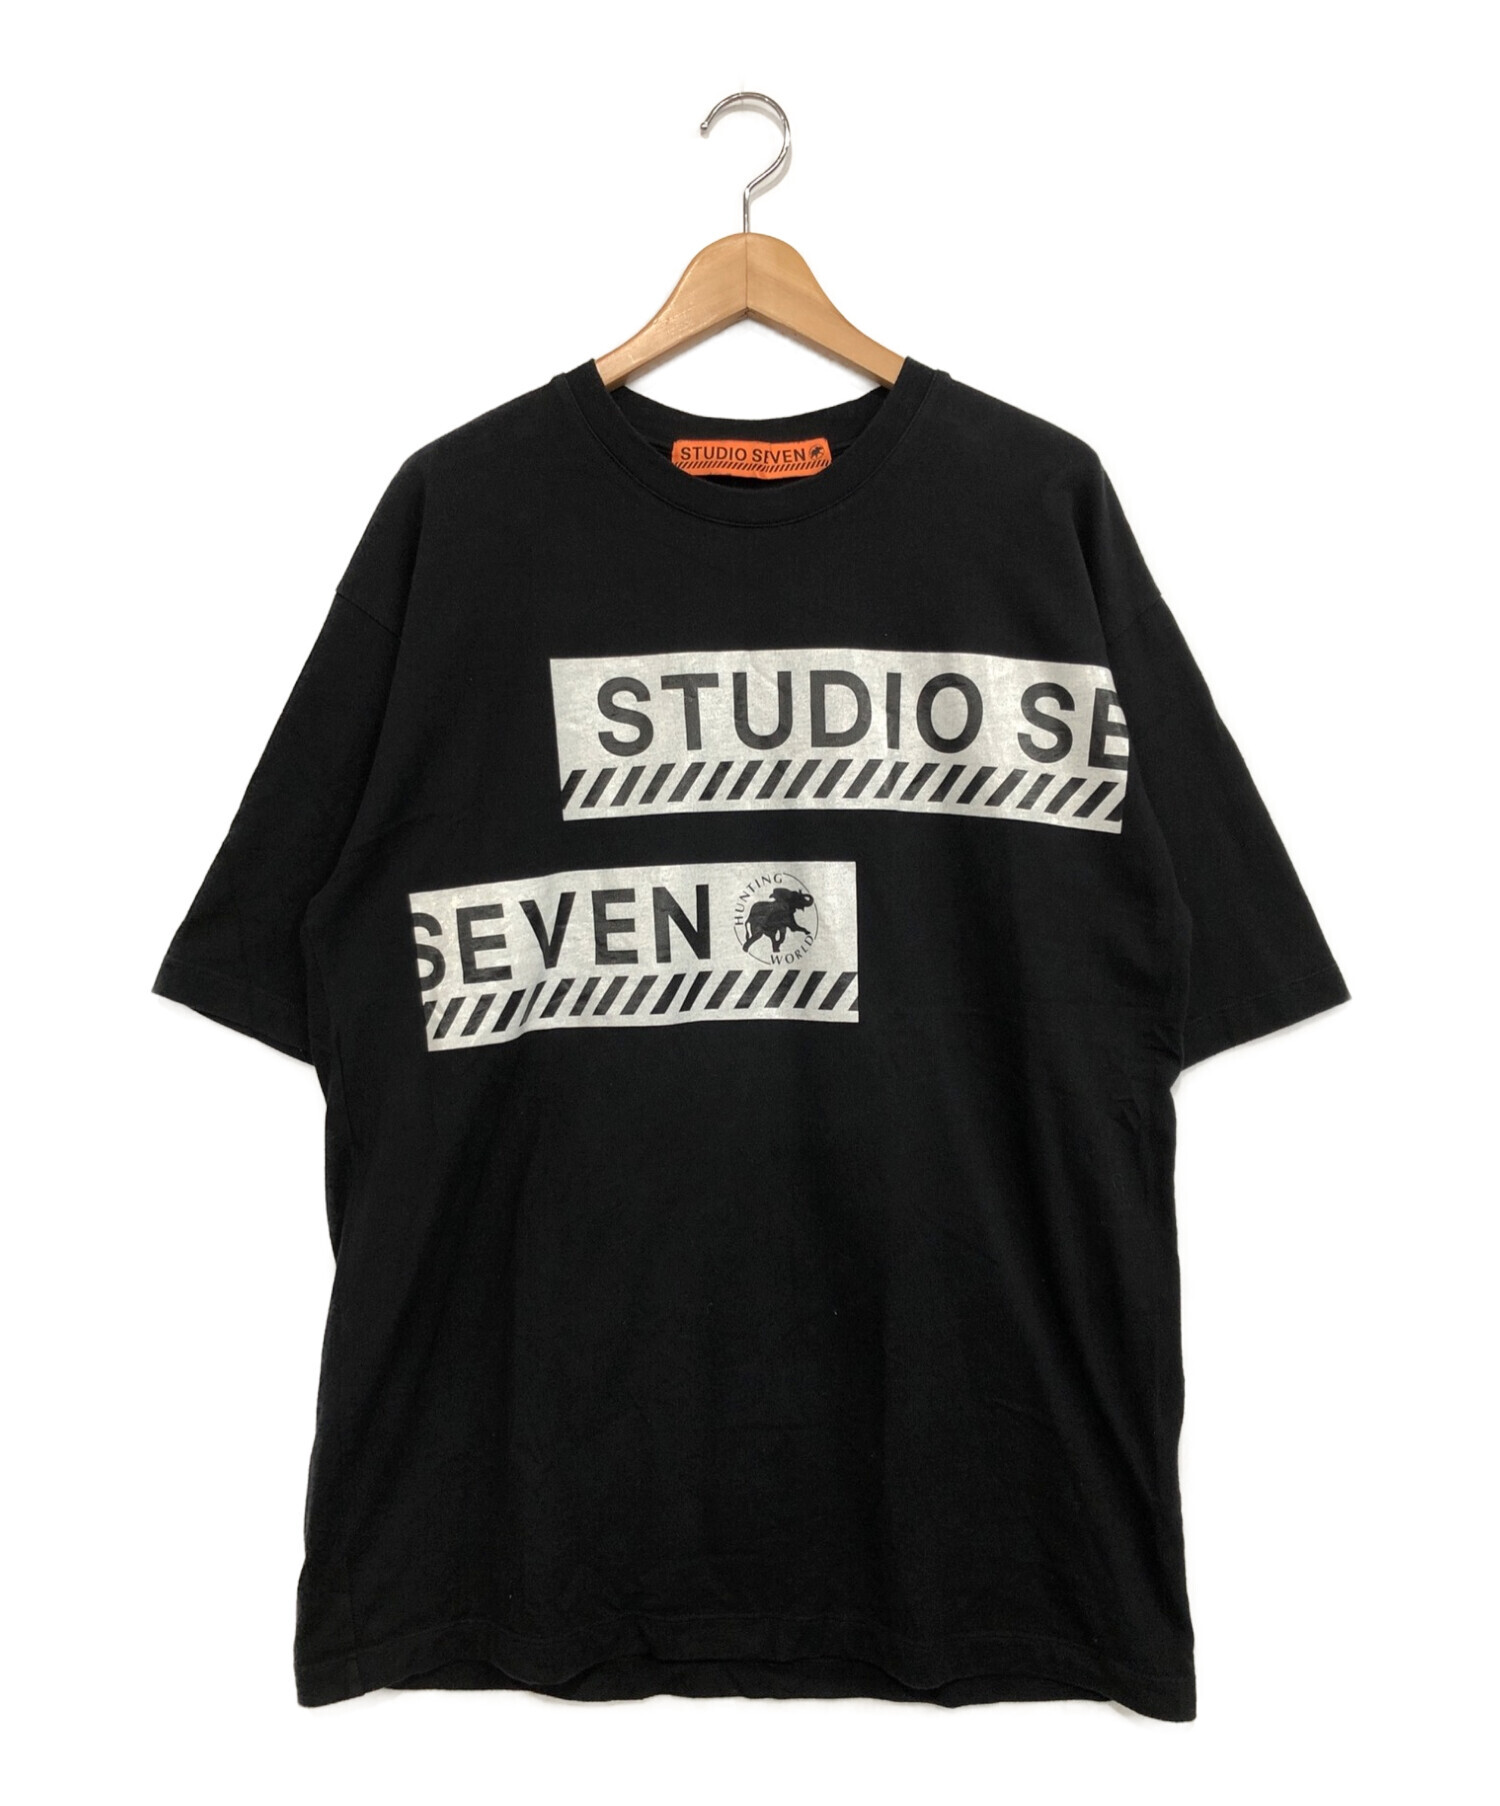 Tシャツ STUDIO SEVEN - Tシャツ